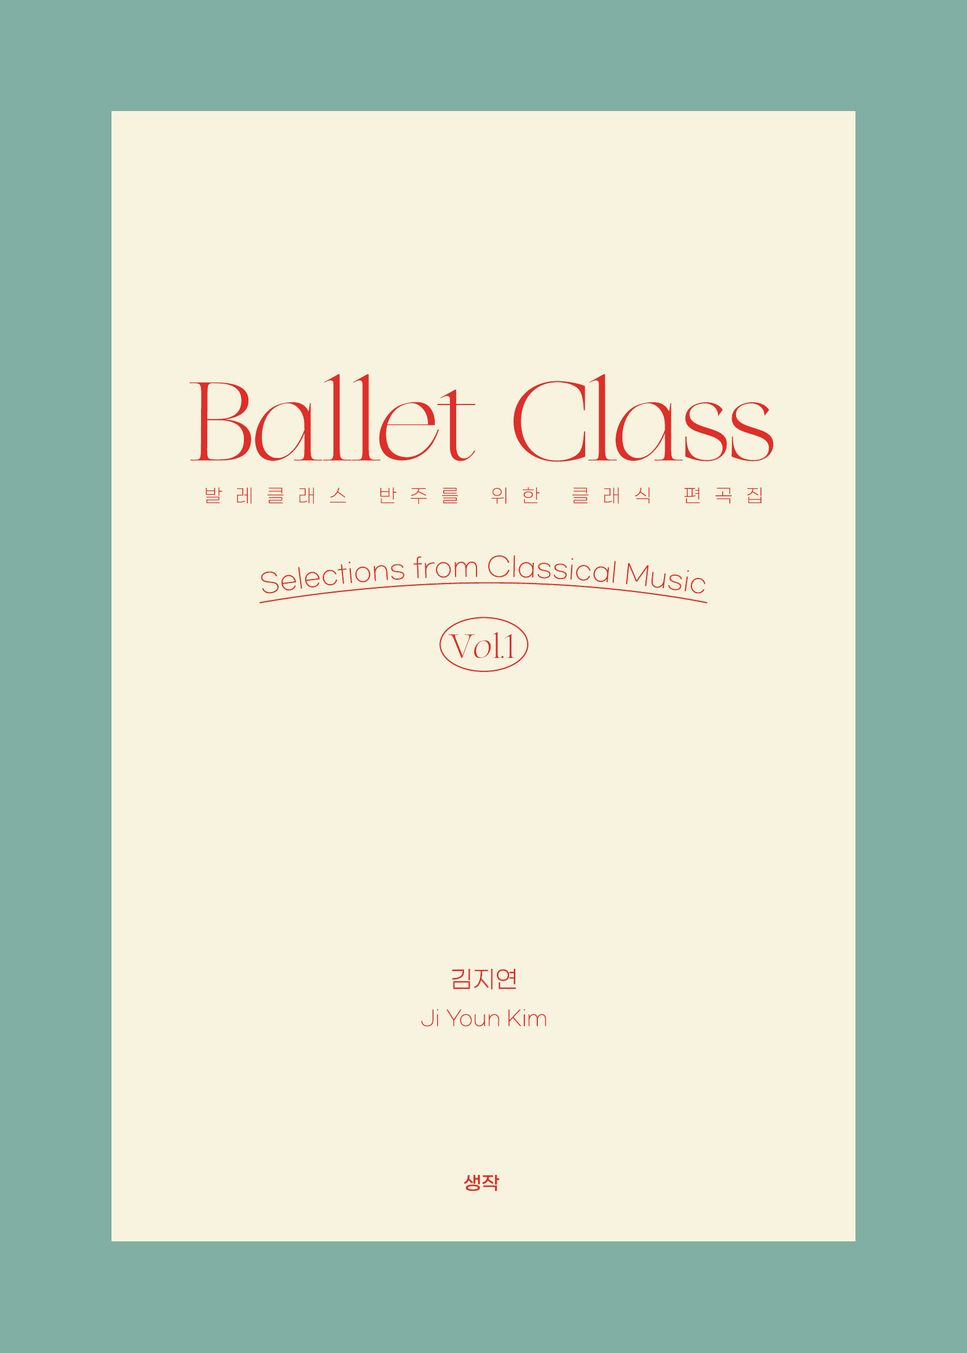 Ji Youn Kim - Ballet Class vol. 1 - 23. Petit allegro 2